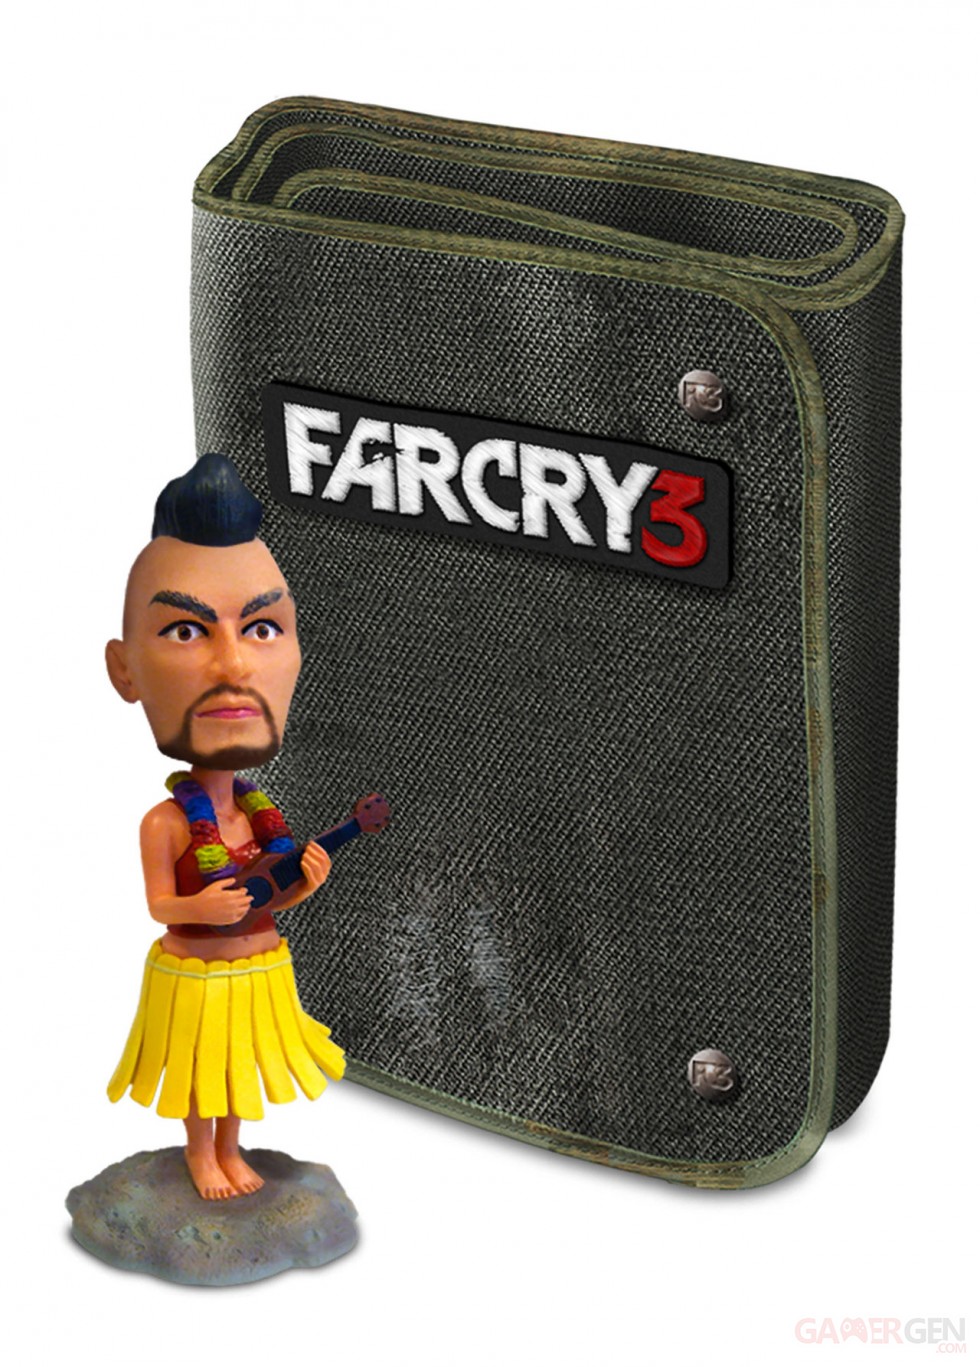 FarCry-3-Insane-Edition-Image-230512-05